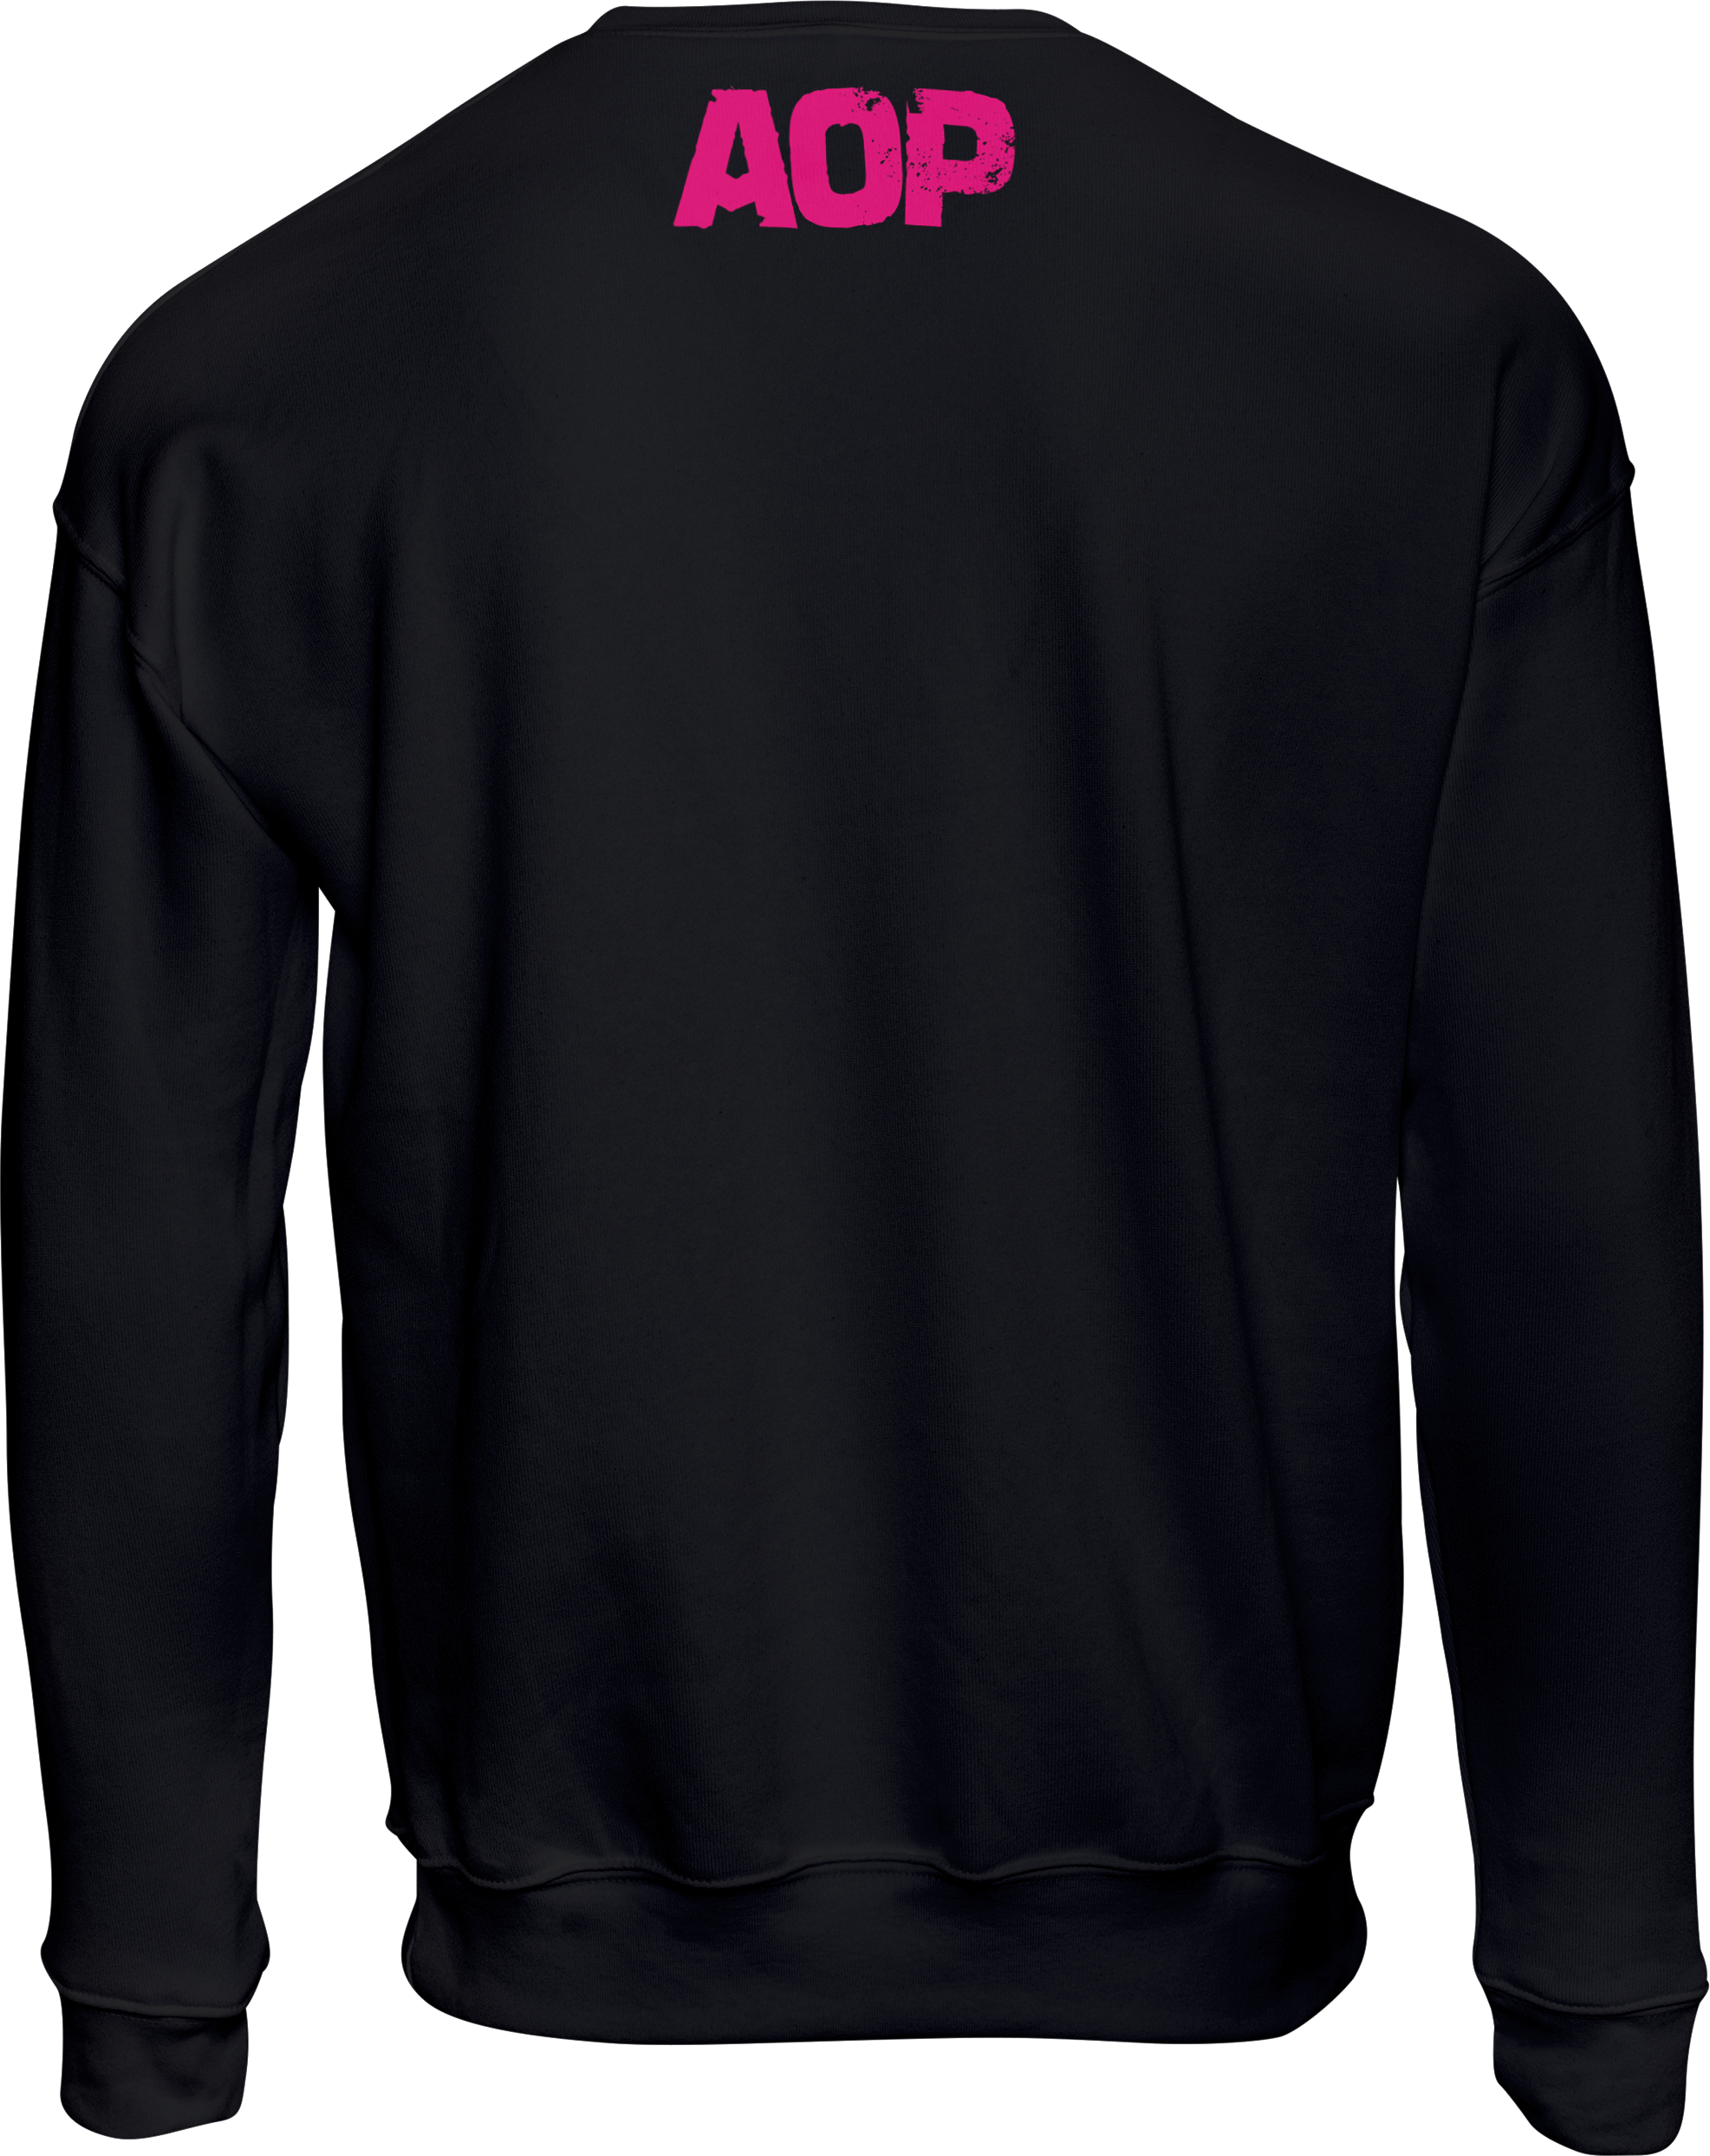 AOP – Von wegen Punkrock Schriftzug – Sweatshirt-Girlie (schwarz)